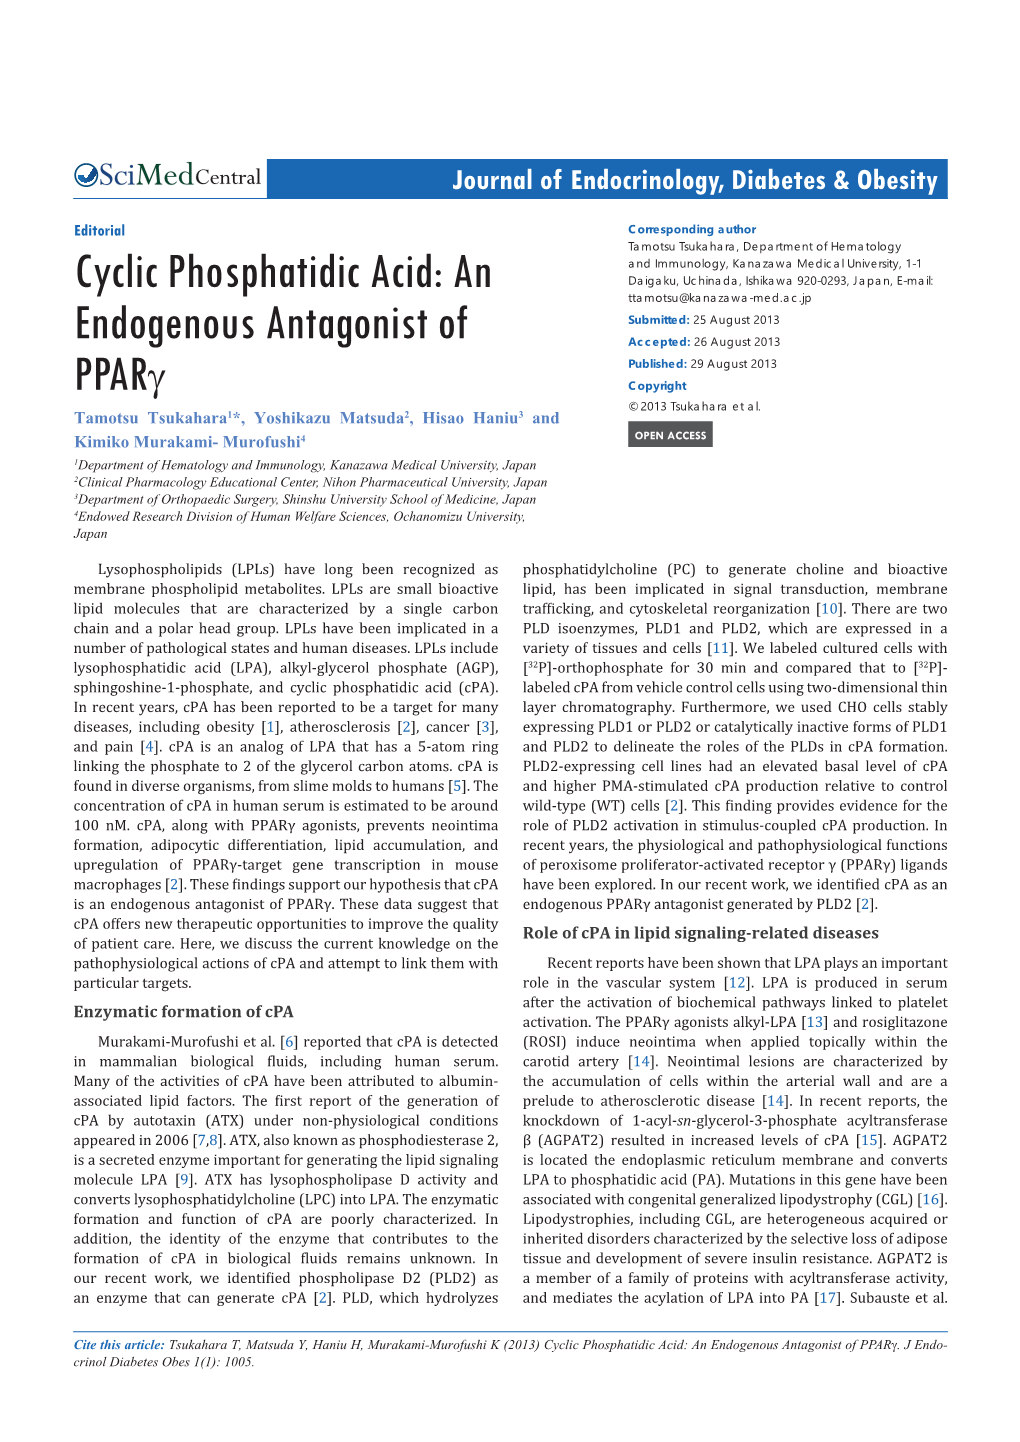 Cyclic Phosphatidic Acid: an Endogenous Antagonist of Pparγ